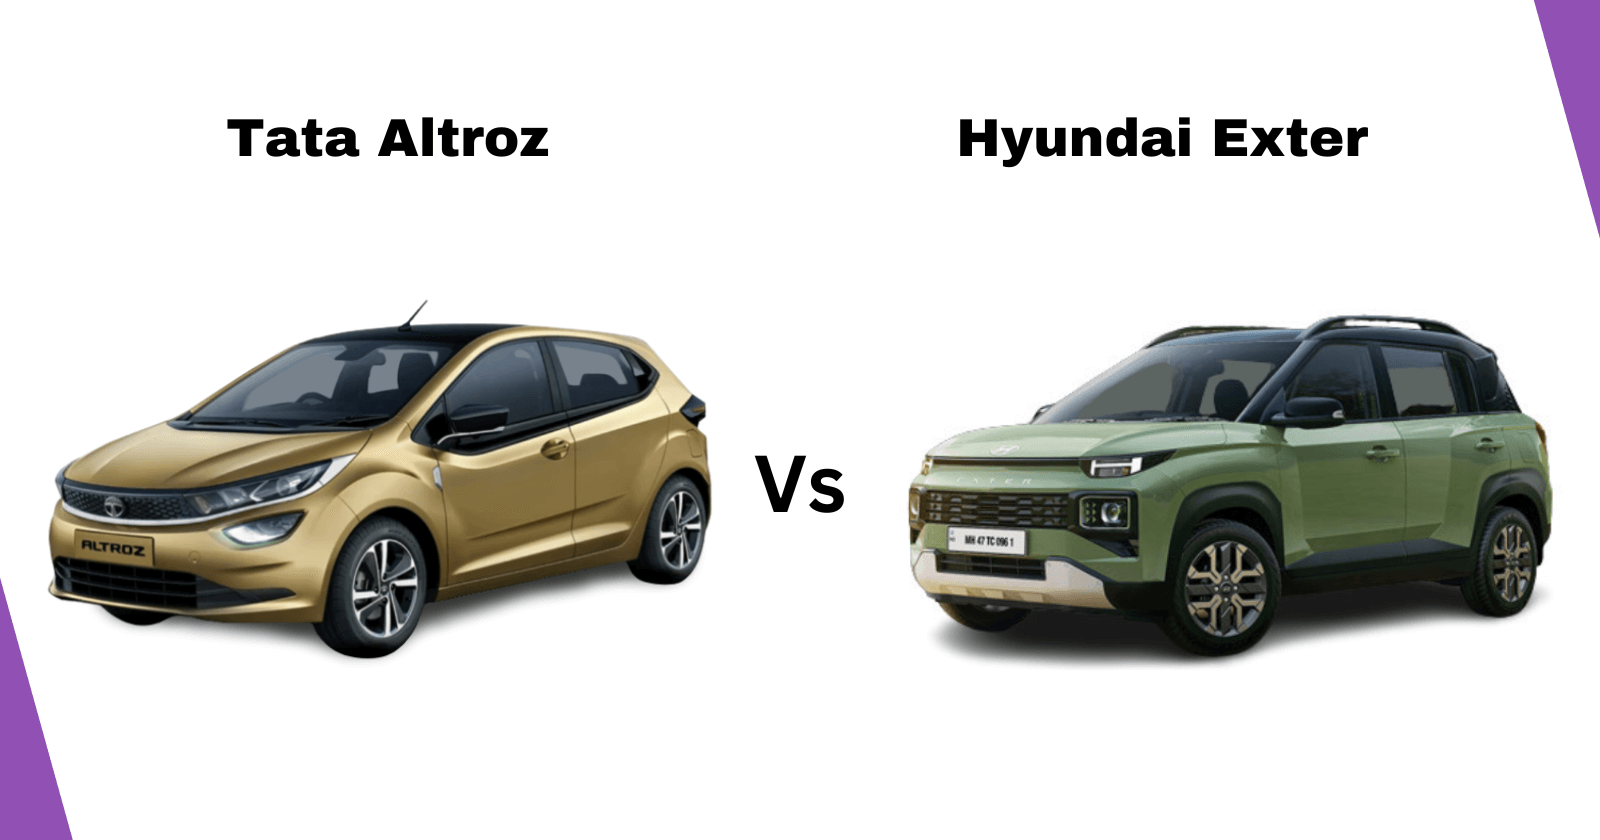 Tata Altroz vs Hyundai Exter